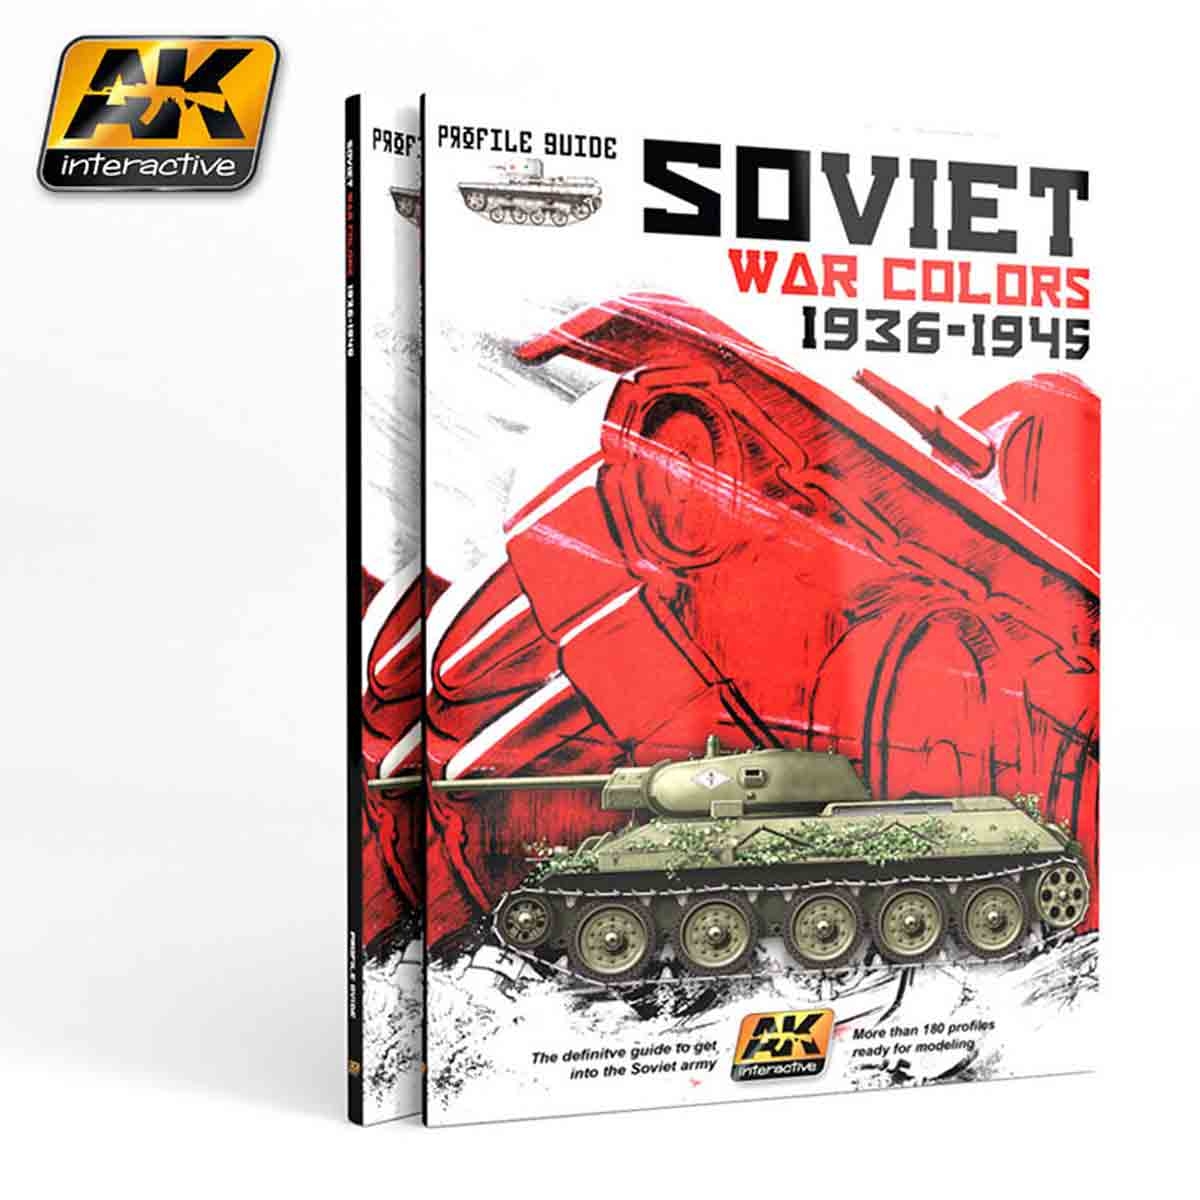 AK-Interactive 270 Soviet War Colors 1936-1945 Profile Guide (English)